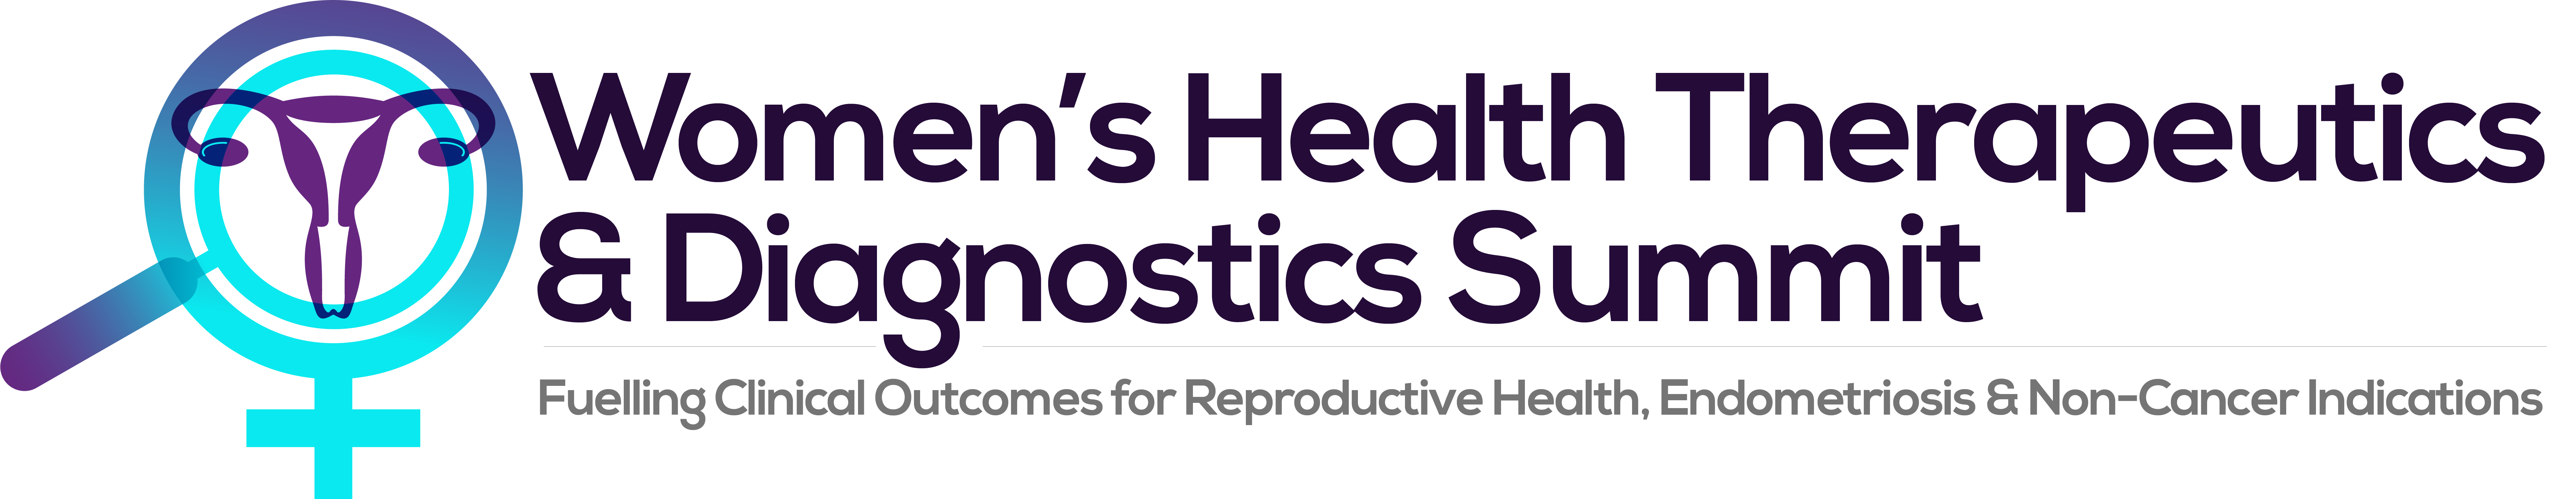 HW240227 48887 – Women’s Health Therapeutics & Diagnostics Summit logo FINAL TAG (9)